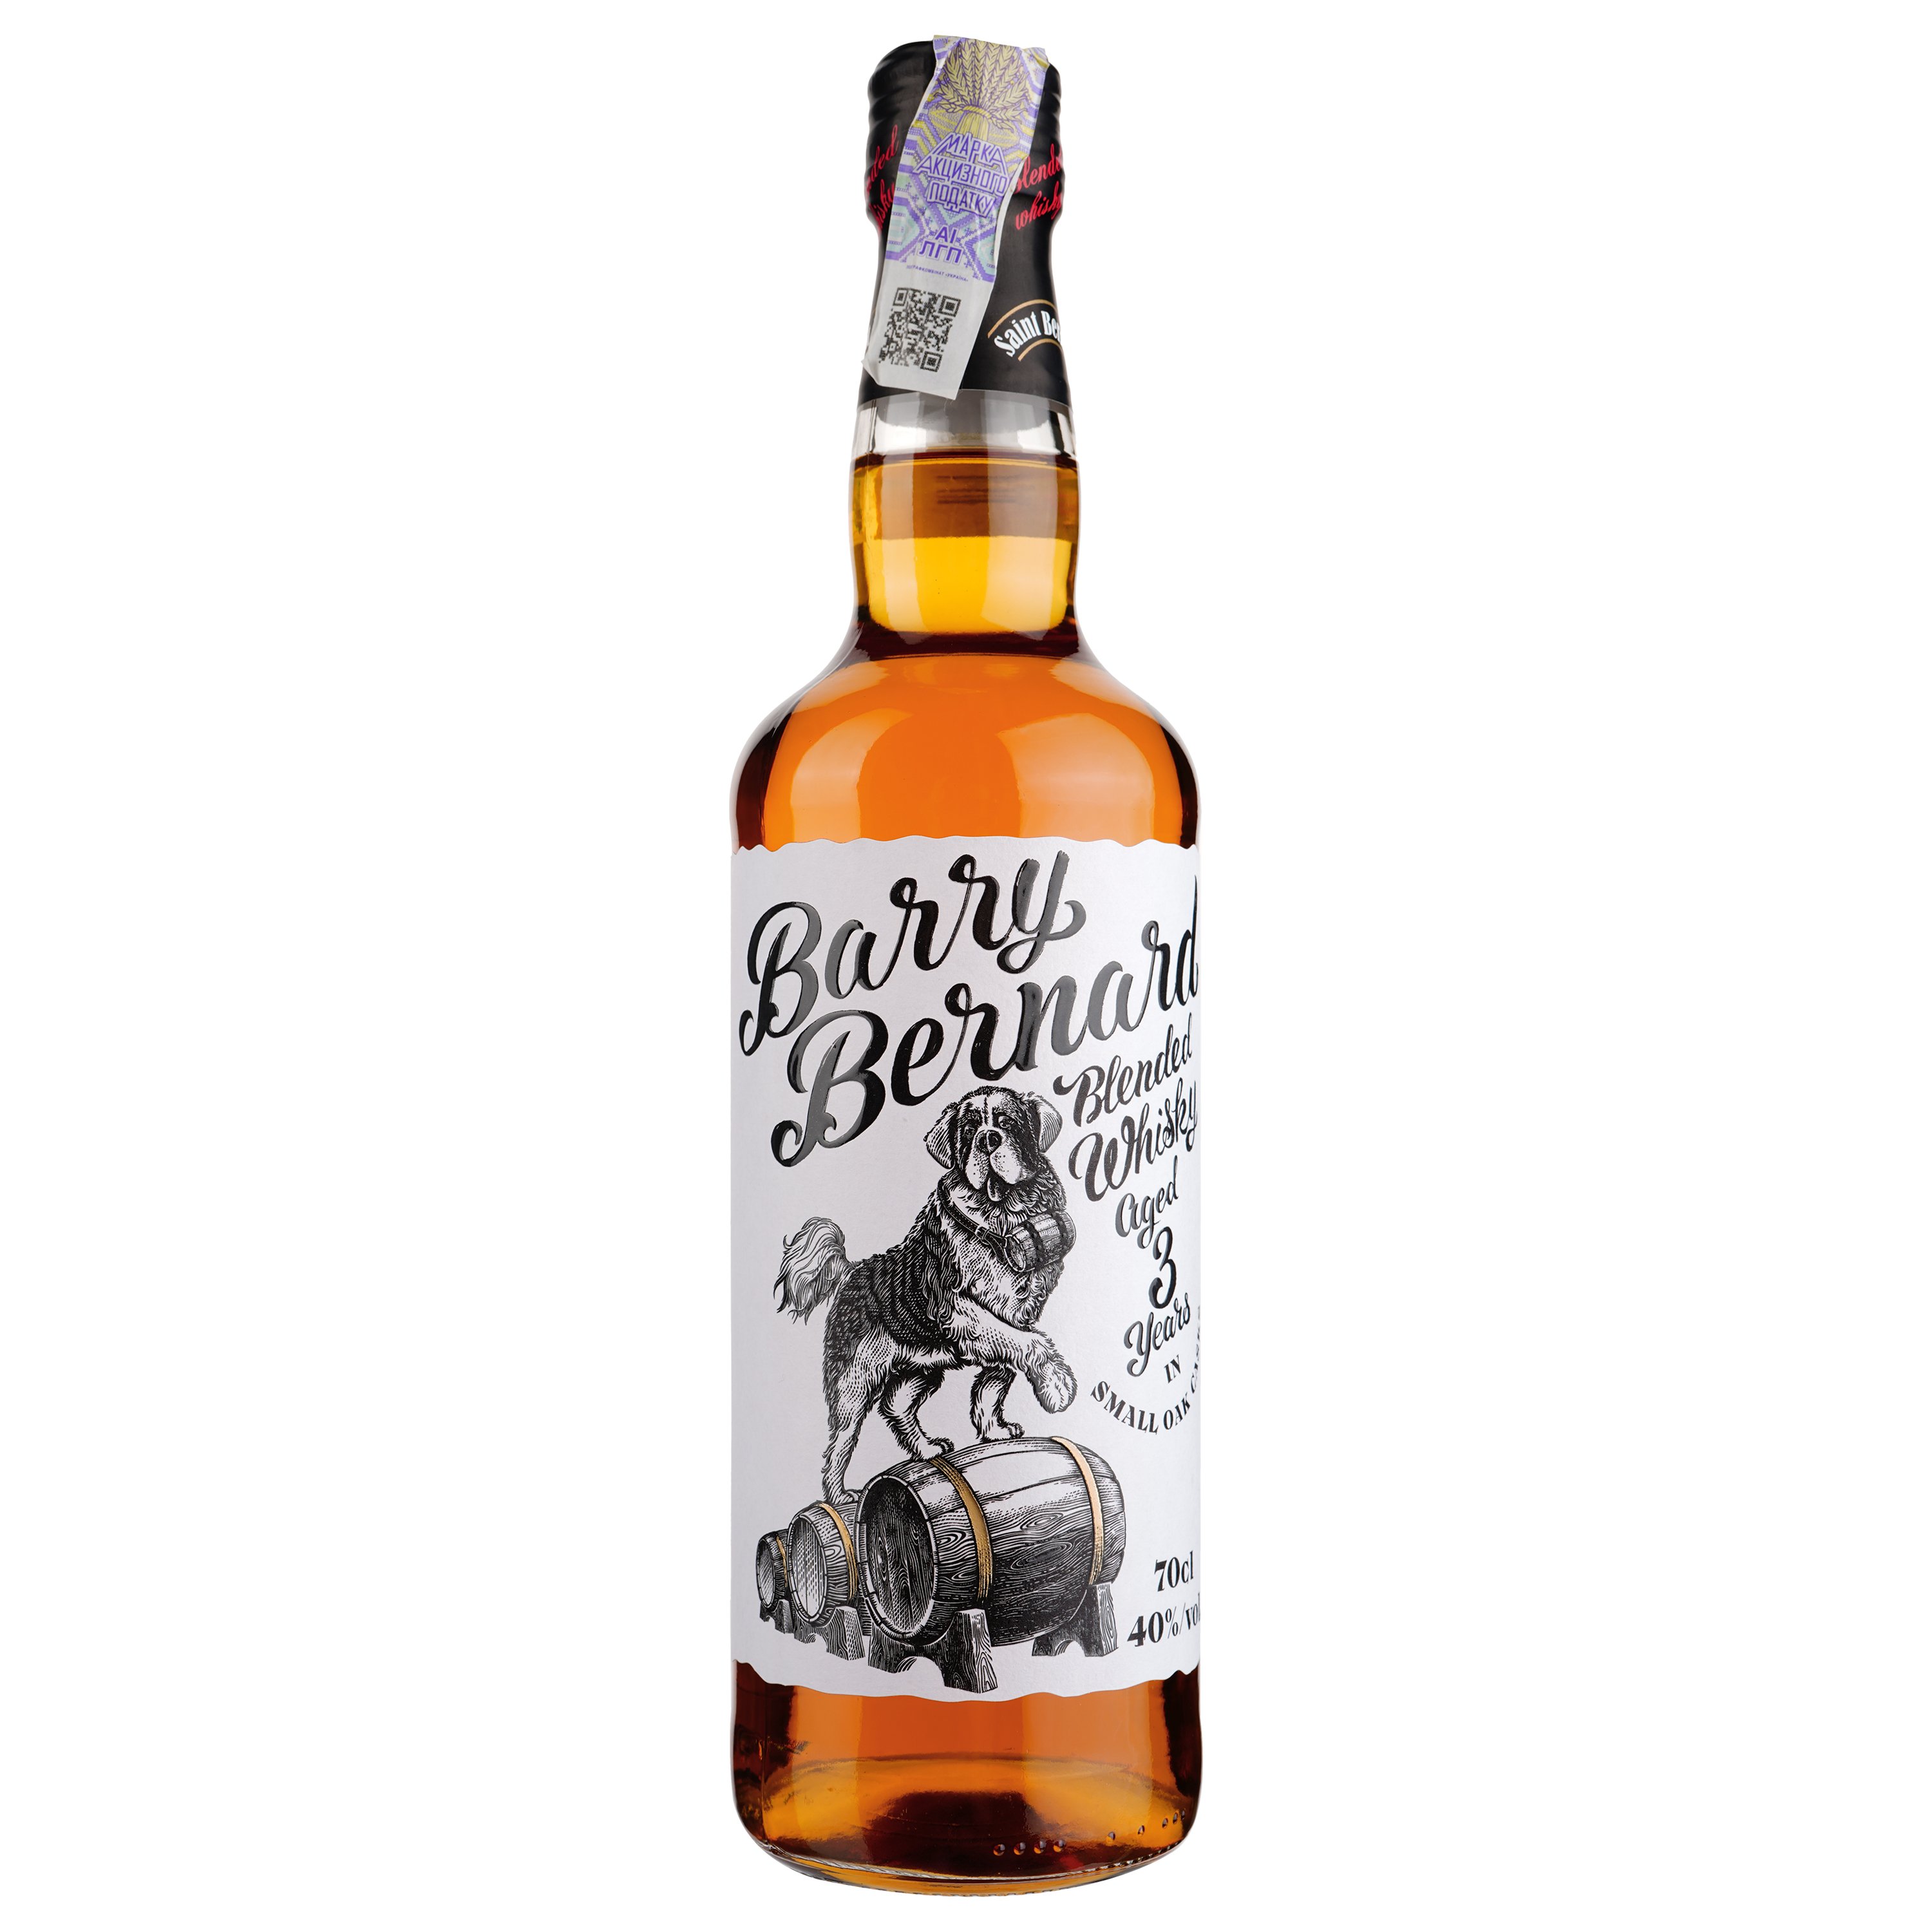 Виски Barry Bernard 3yo Blended Whisky 40% 0.7 л - фото 1